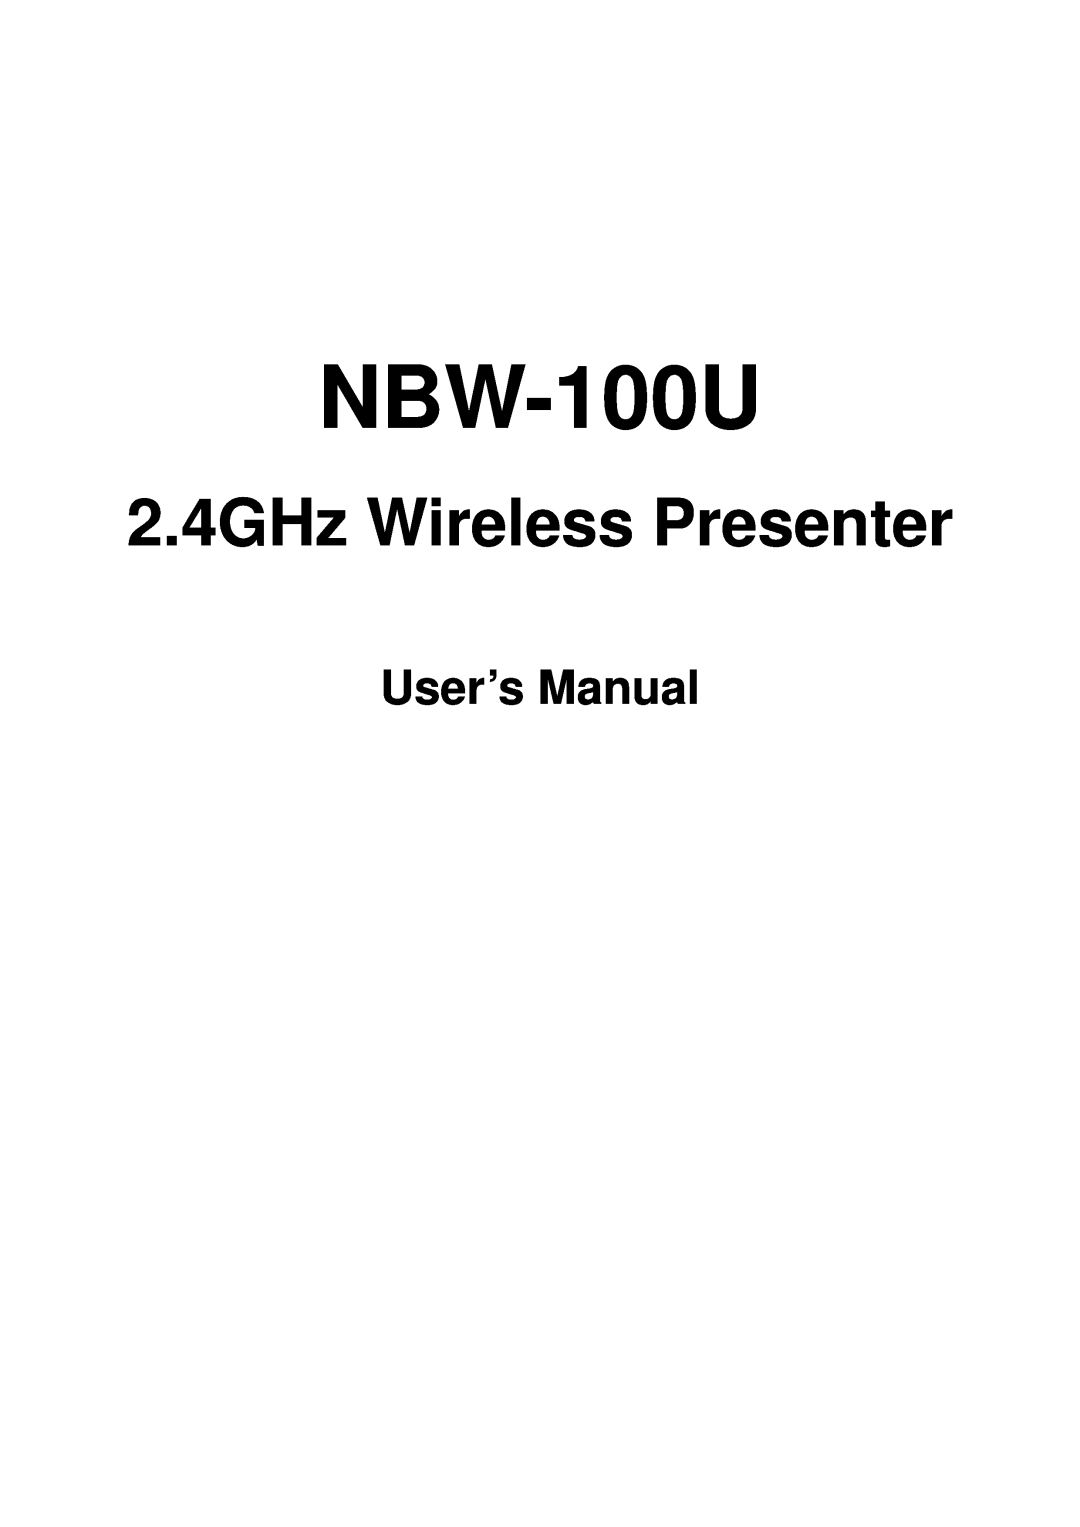 Vantec NBW-100U user manual User’s Manual, 2.4GHz Wireless Presenter 